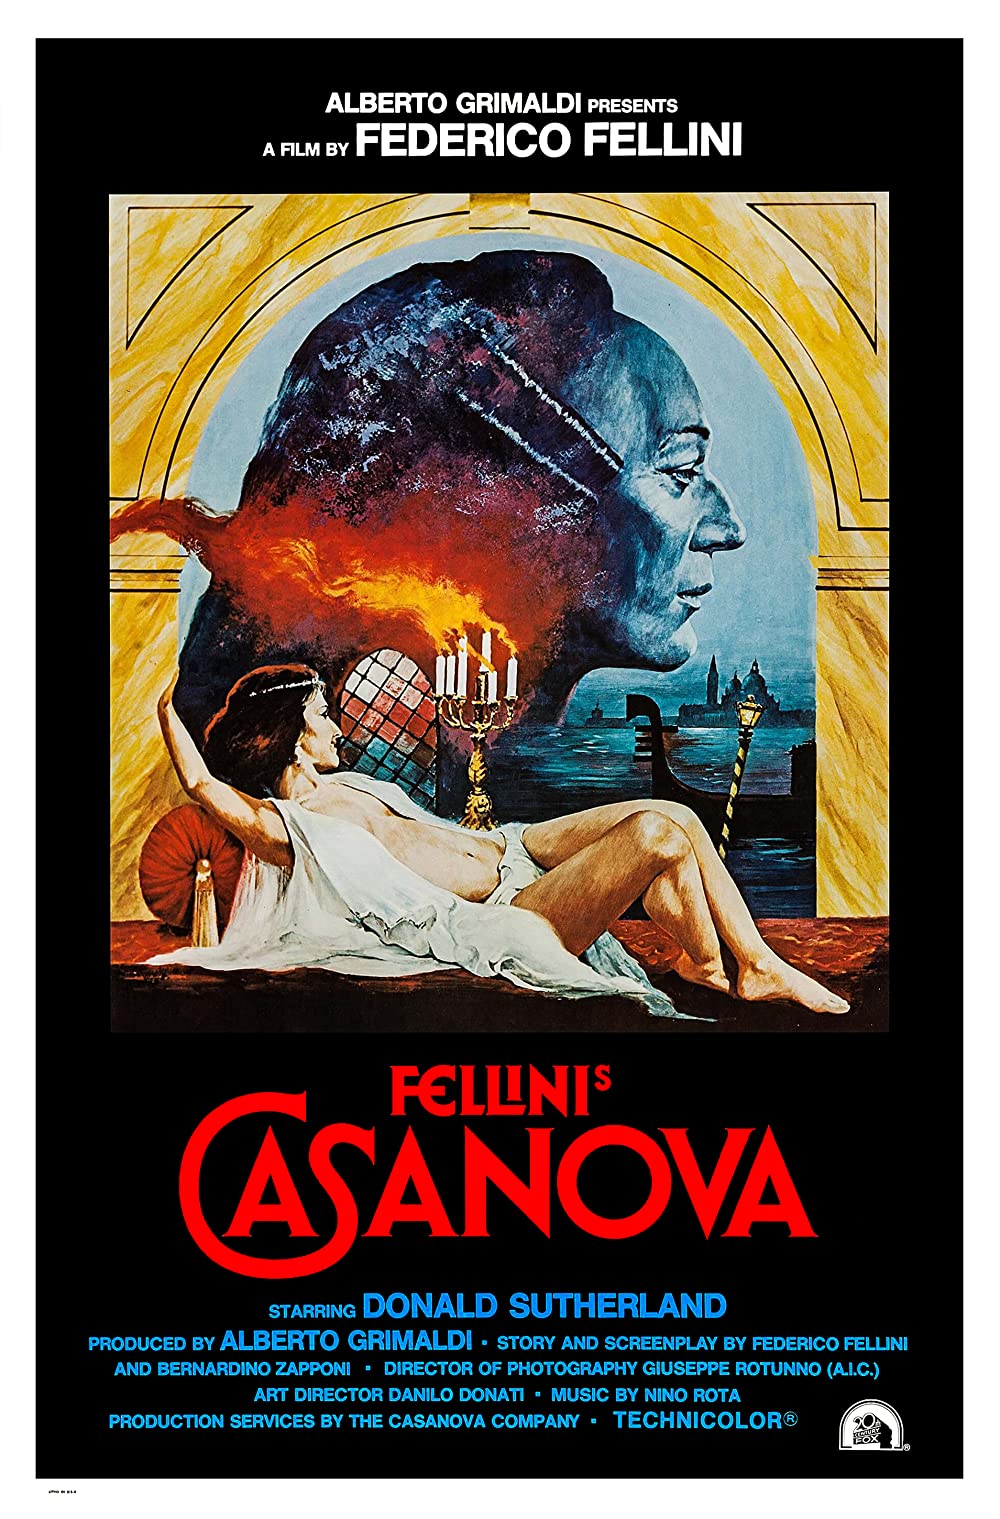 Filmbeschreibung zu Fellinis Casanova (OV)